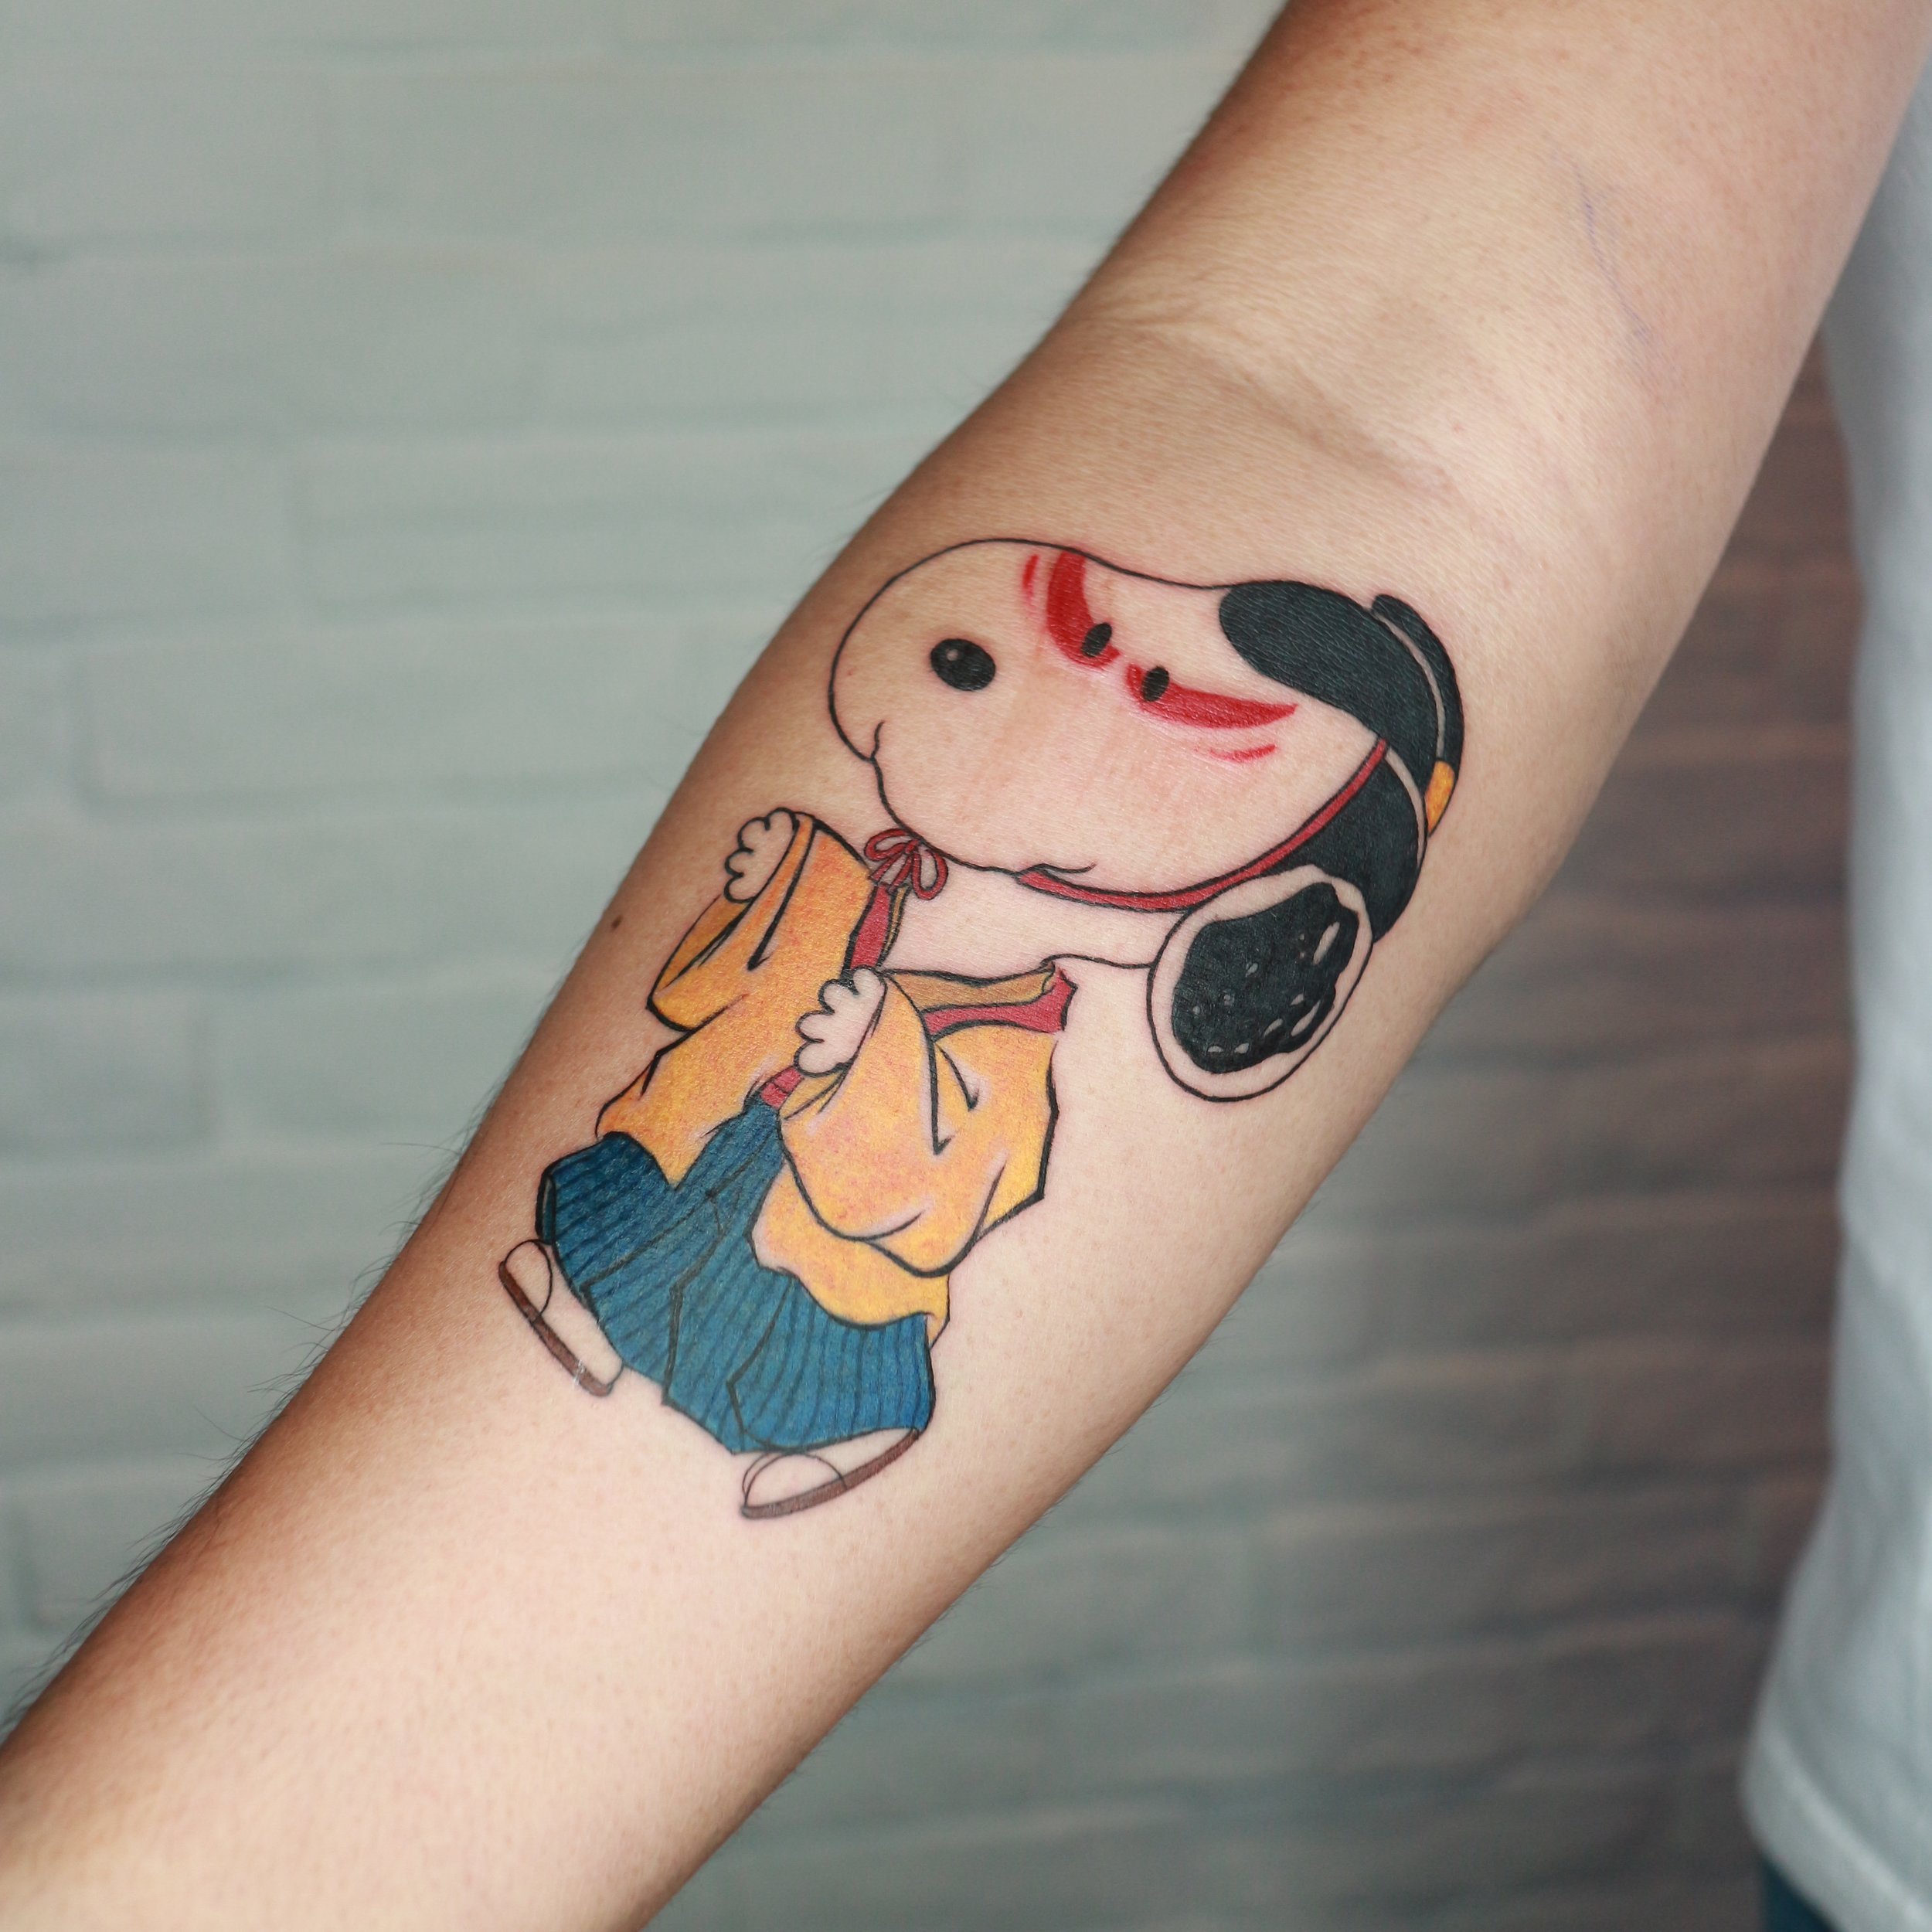 Jenna — Friday's Tattoo HK | Tattoo Studio From Hong Kong